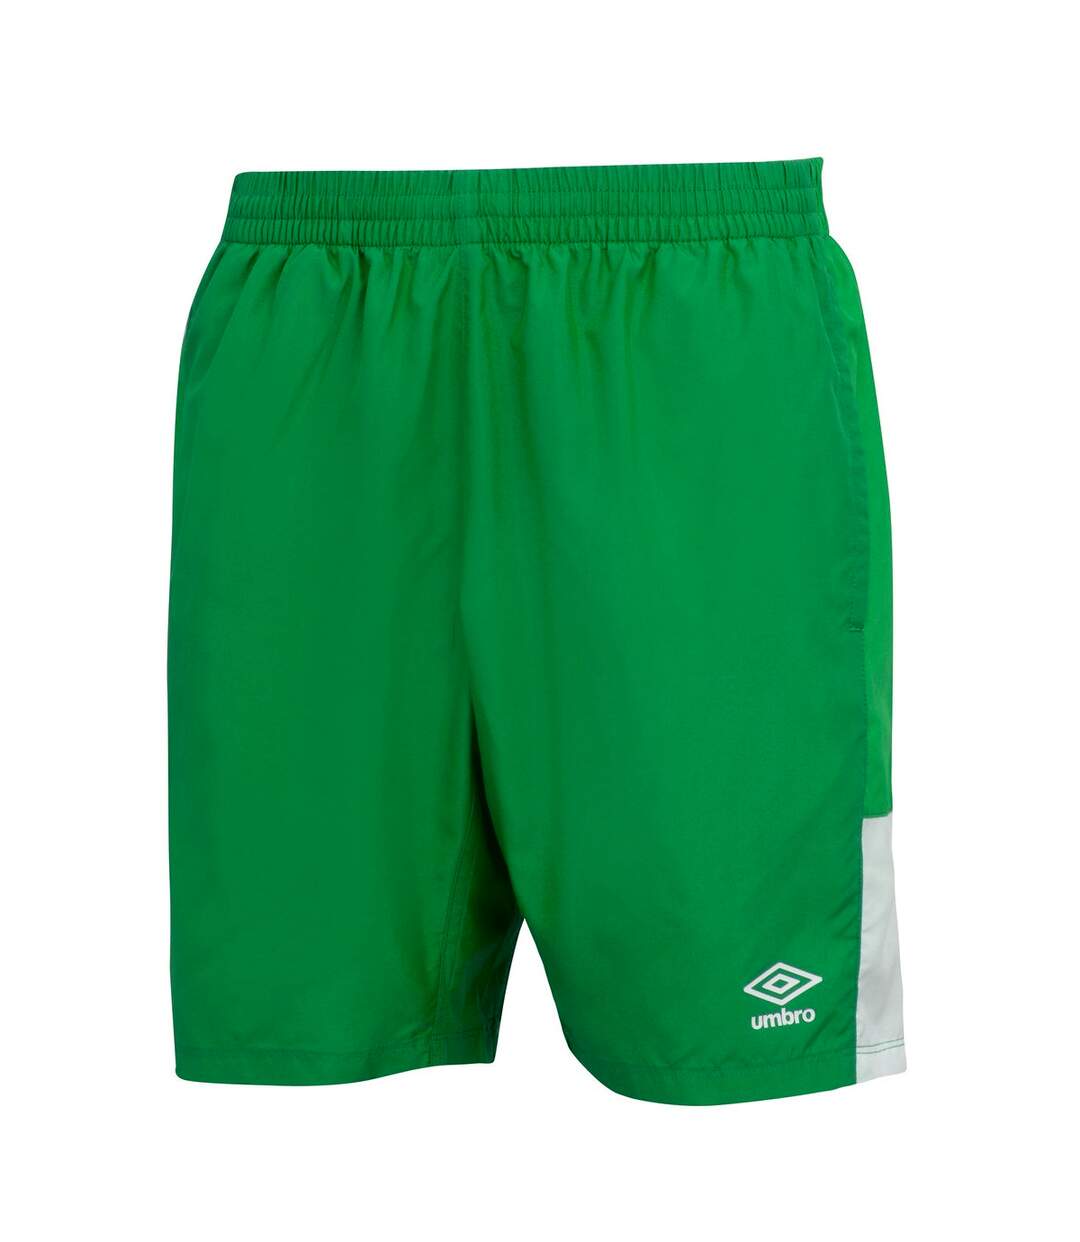 Umbro Mens Training Rugby Shorts (Verdant Green/Emerald/White)